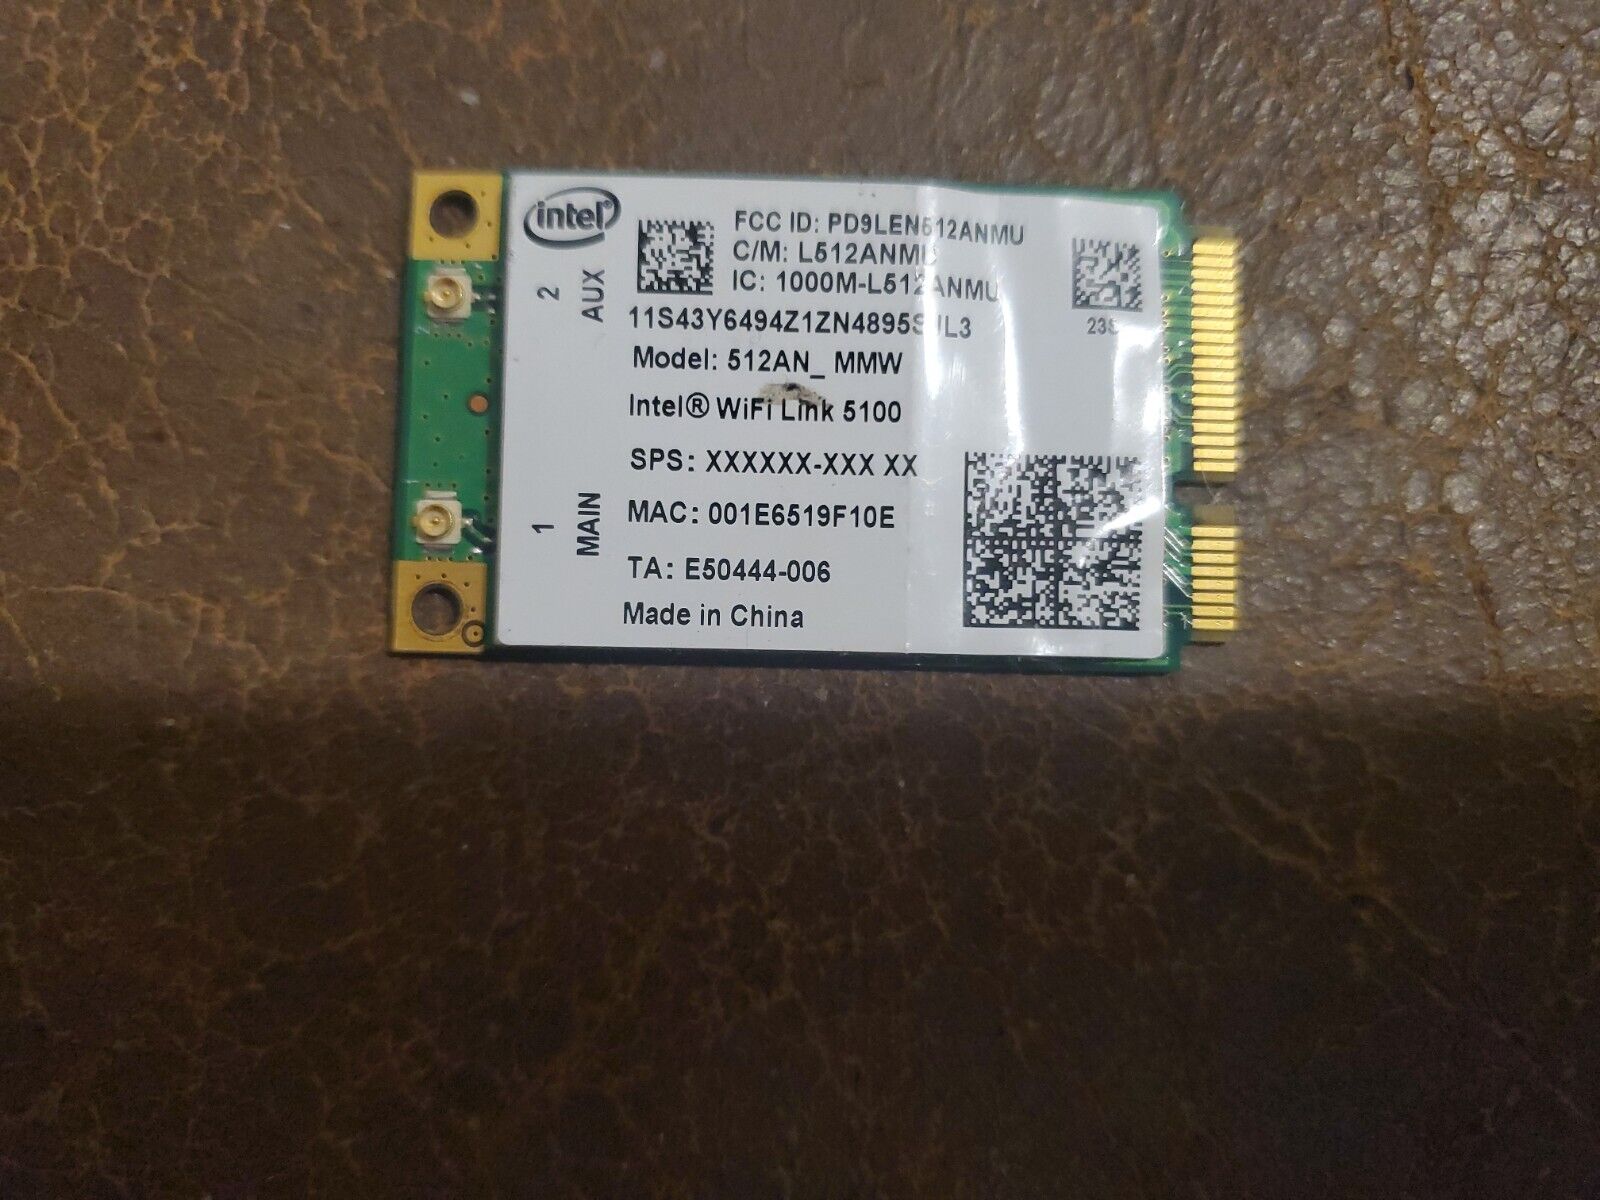 Intel 512AN_MMW WiFi Link 5100 IEEE 802.11 AGN Mini PCI-E Laptop Wireless Card